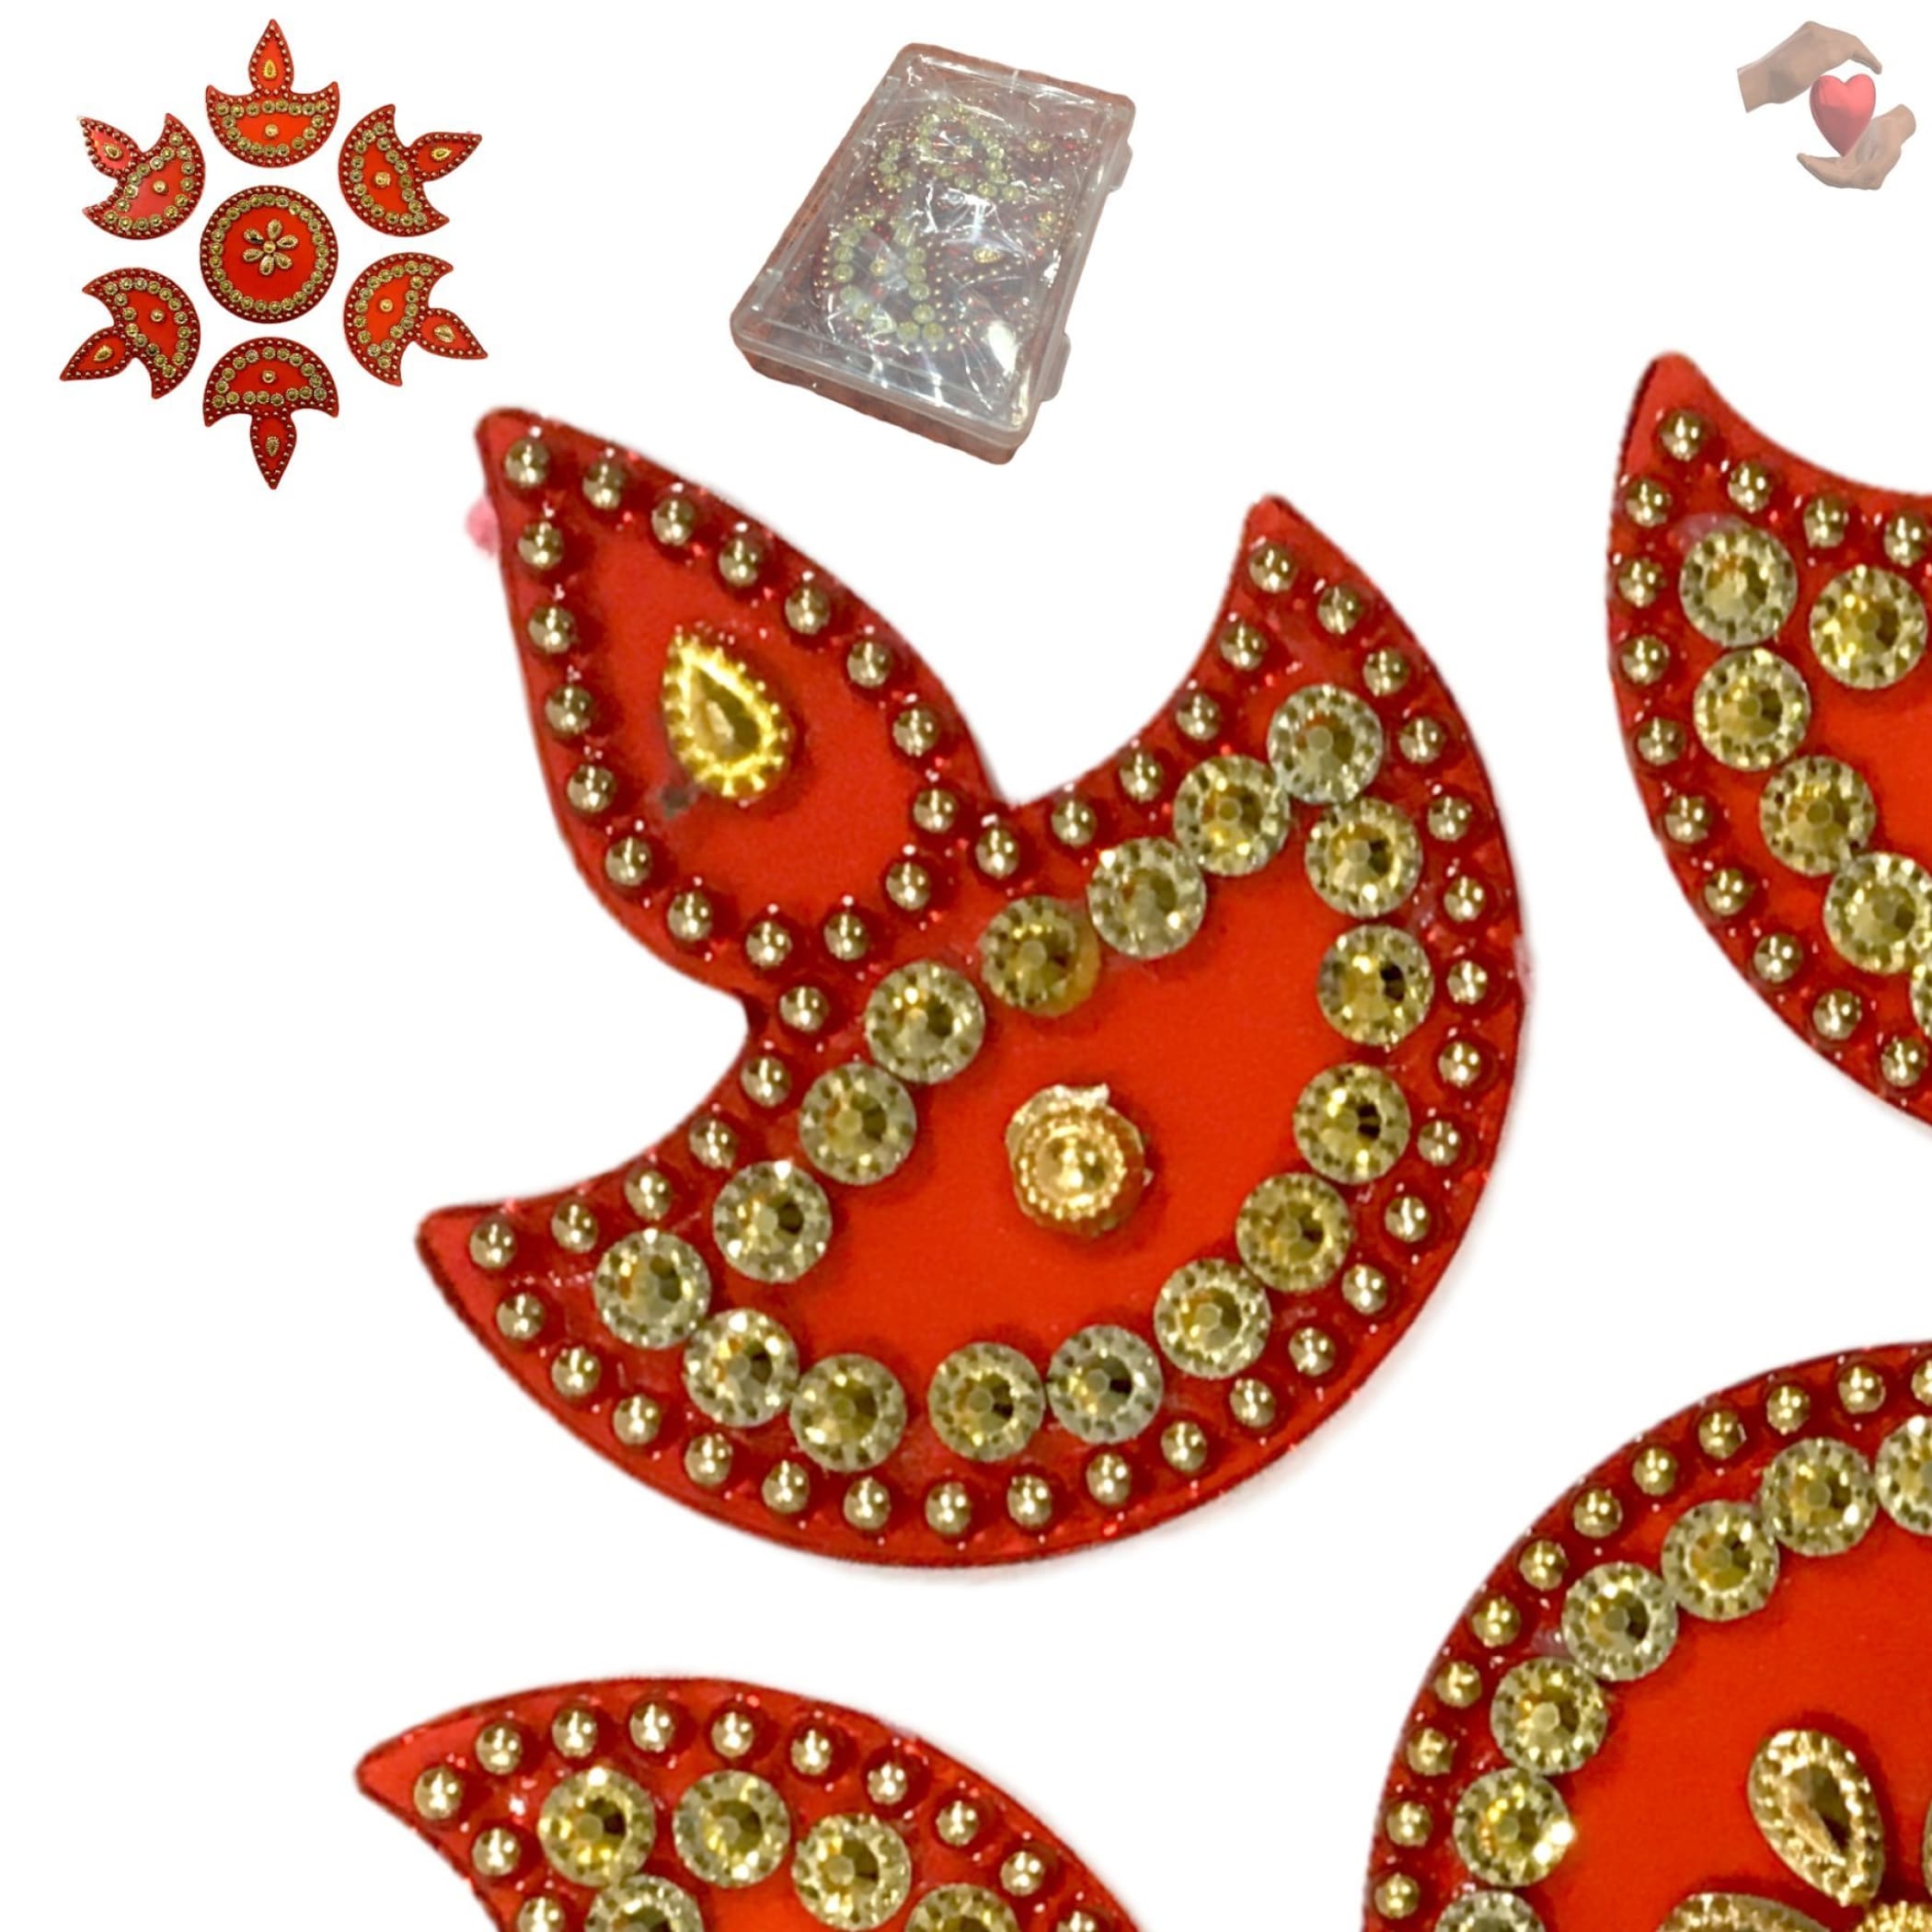 Personalize diwali gifts box navratri sweet gift boxes